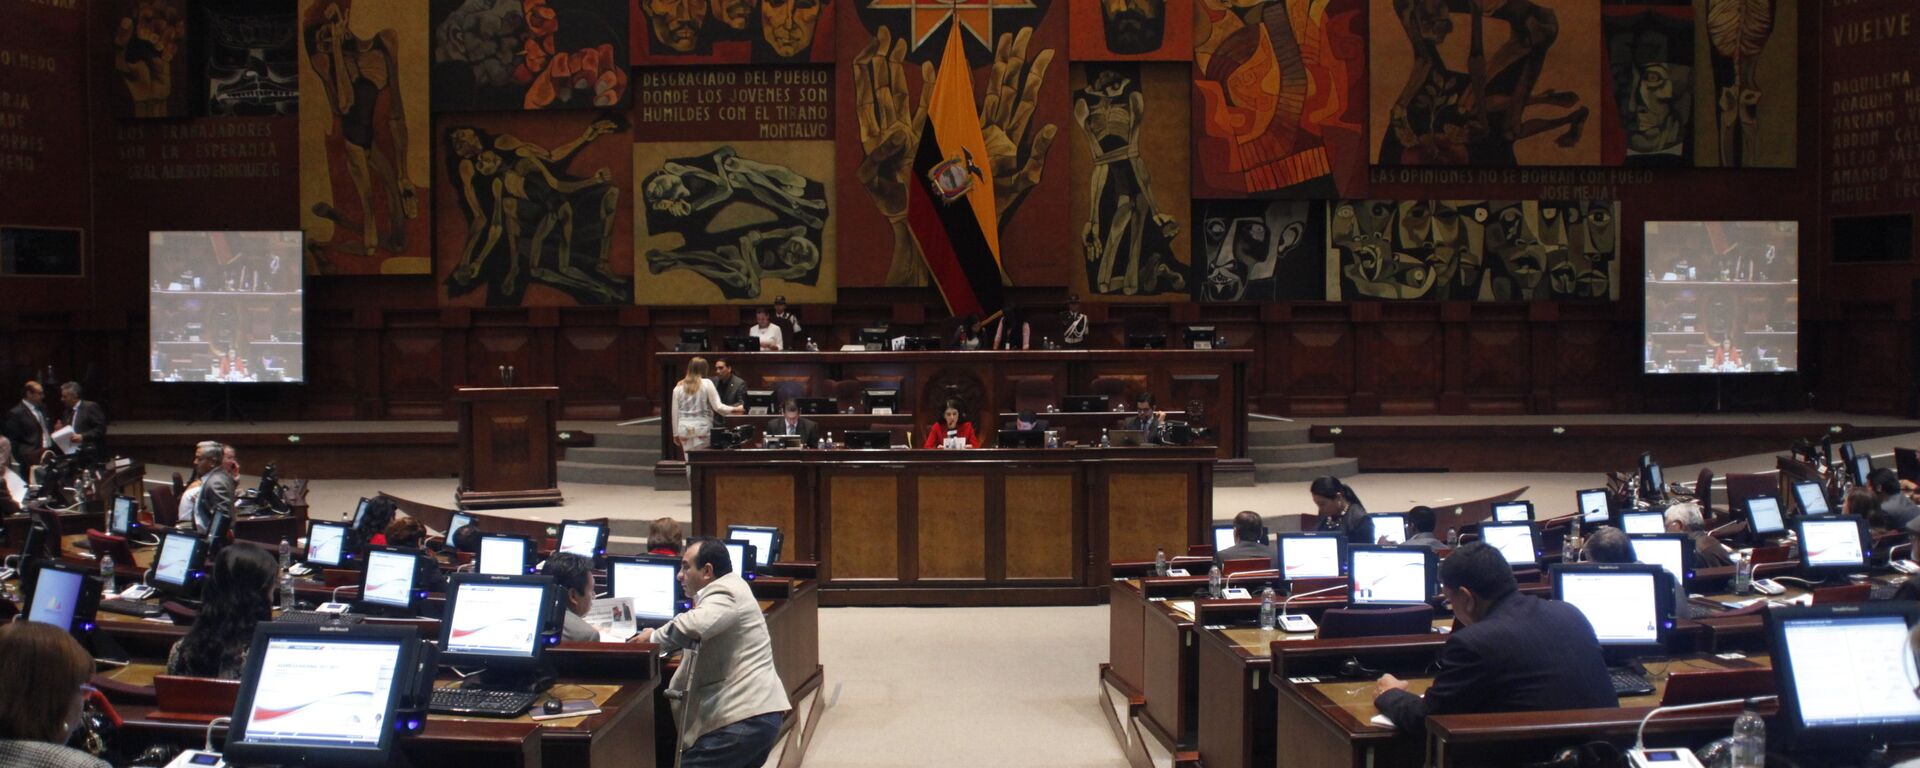 La Asamblea Nacional de Ecuador (archivo) - Sputnik Mundo, 1920, 21.10.2021